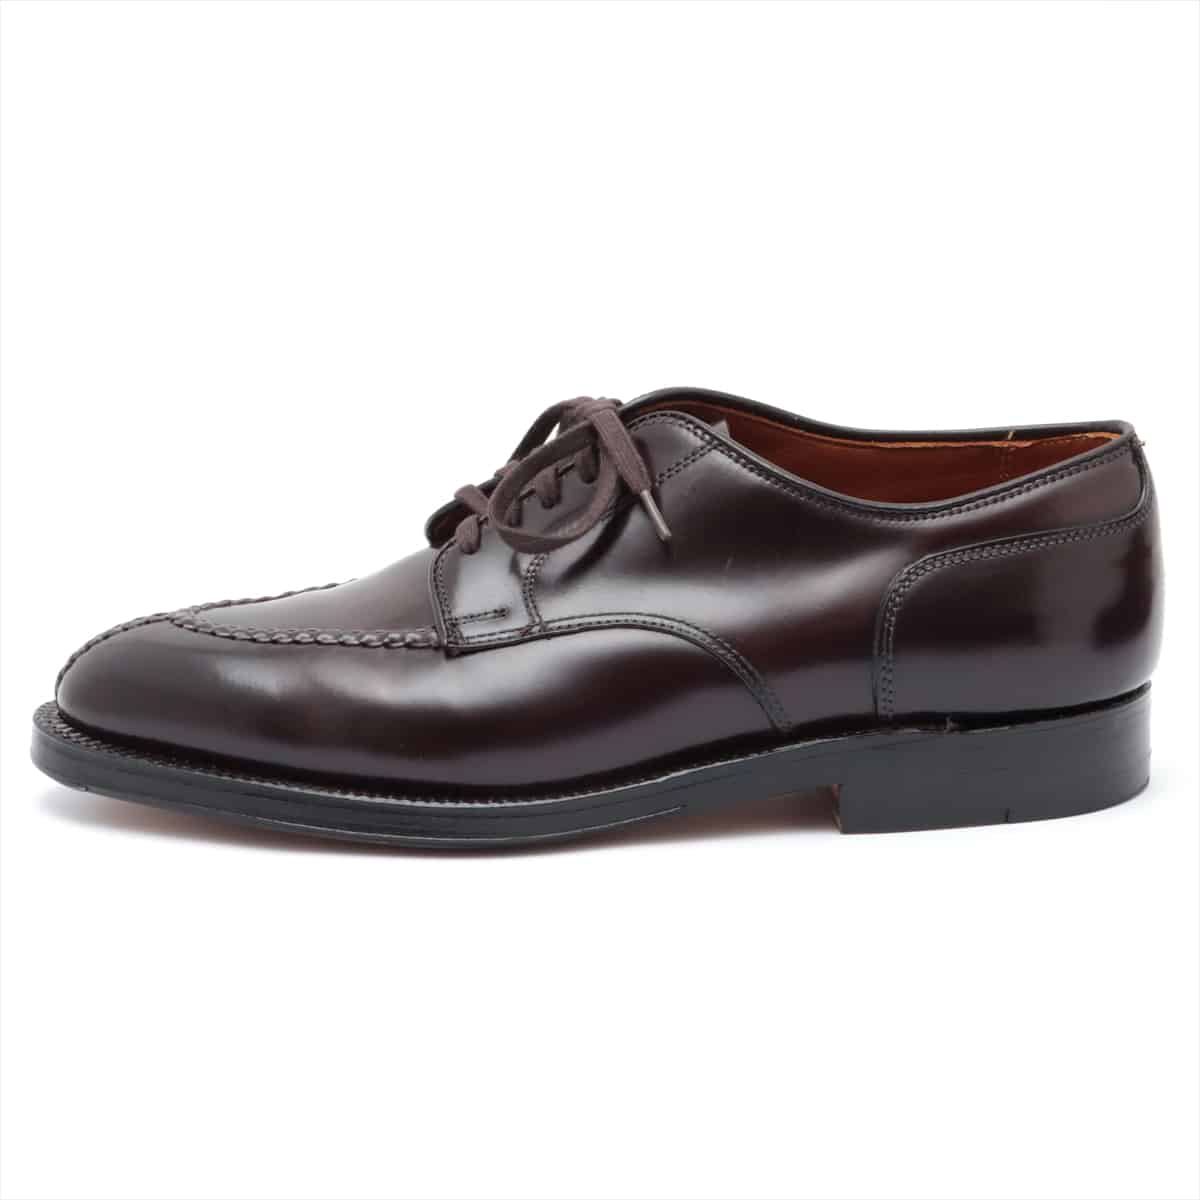 Alden Cordovan Leather shoes 8 Men's Burgundy 2210